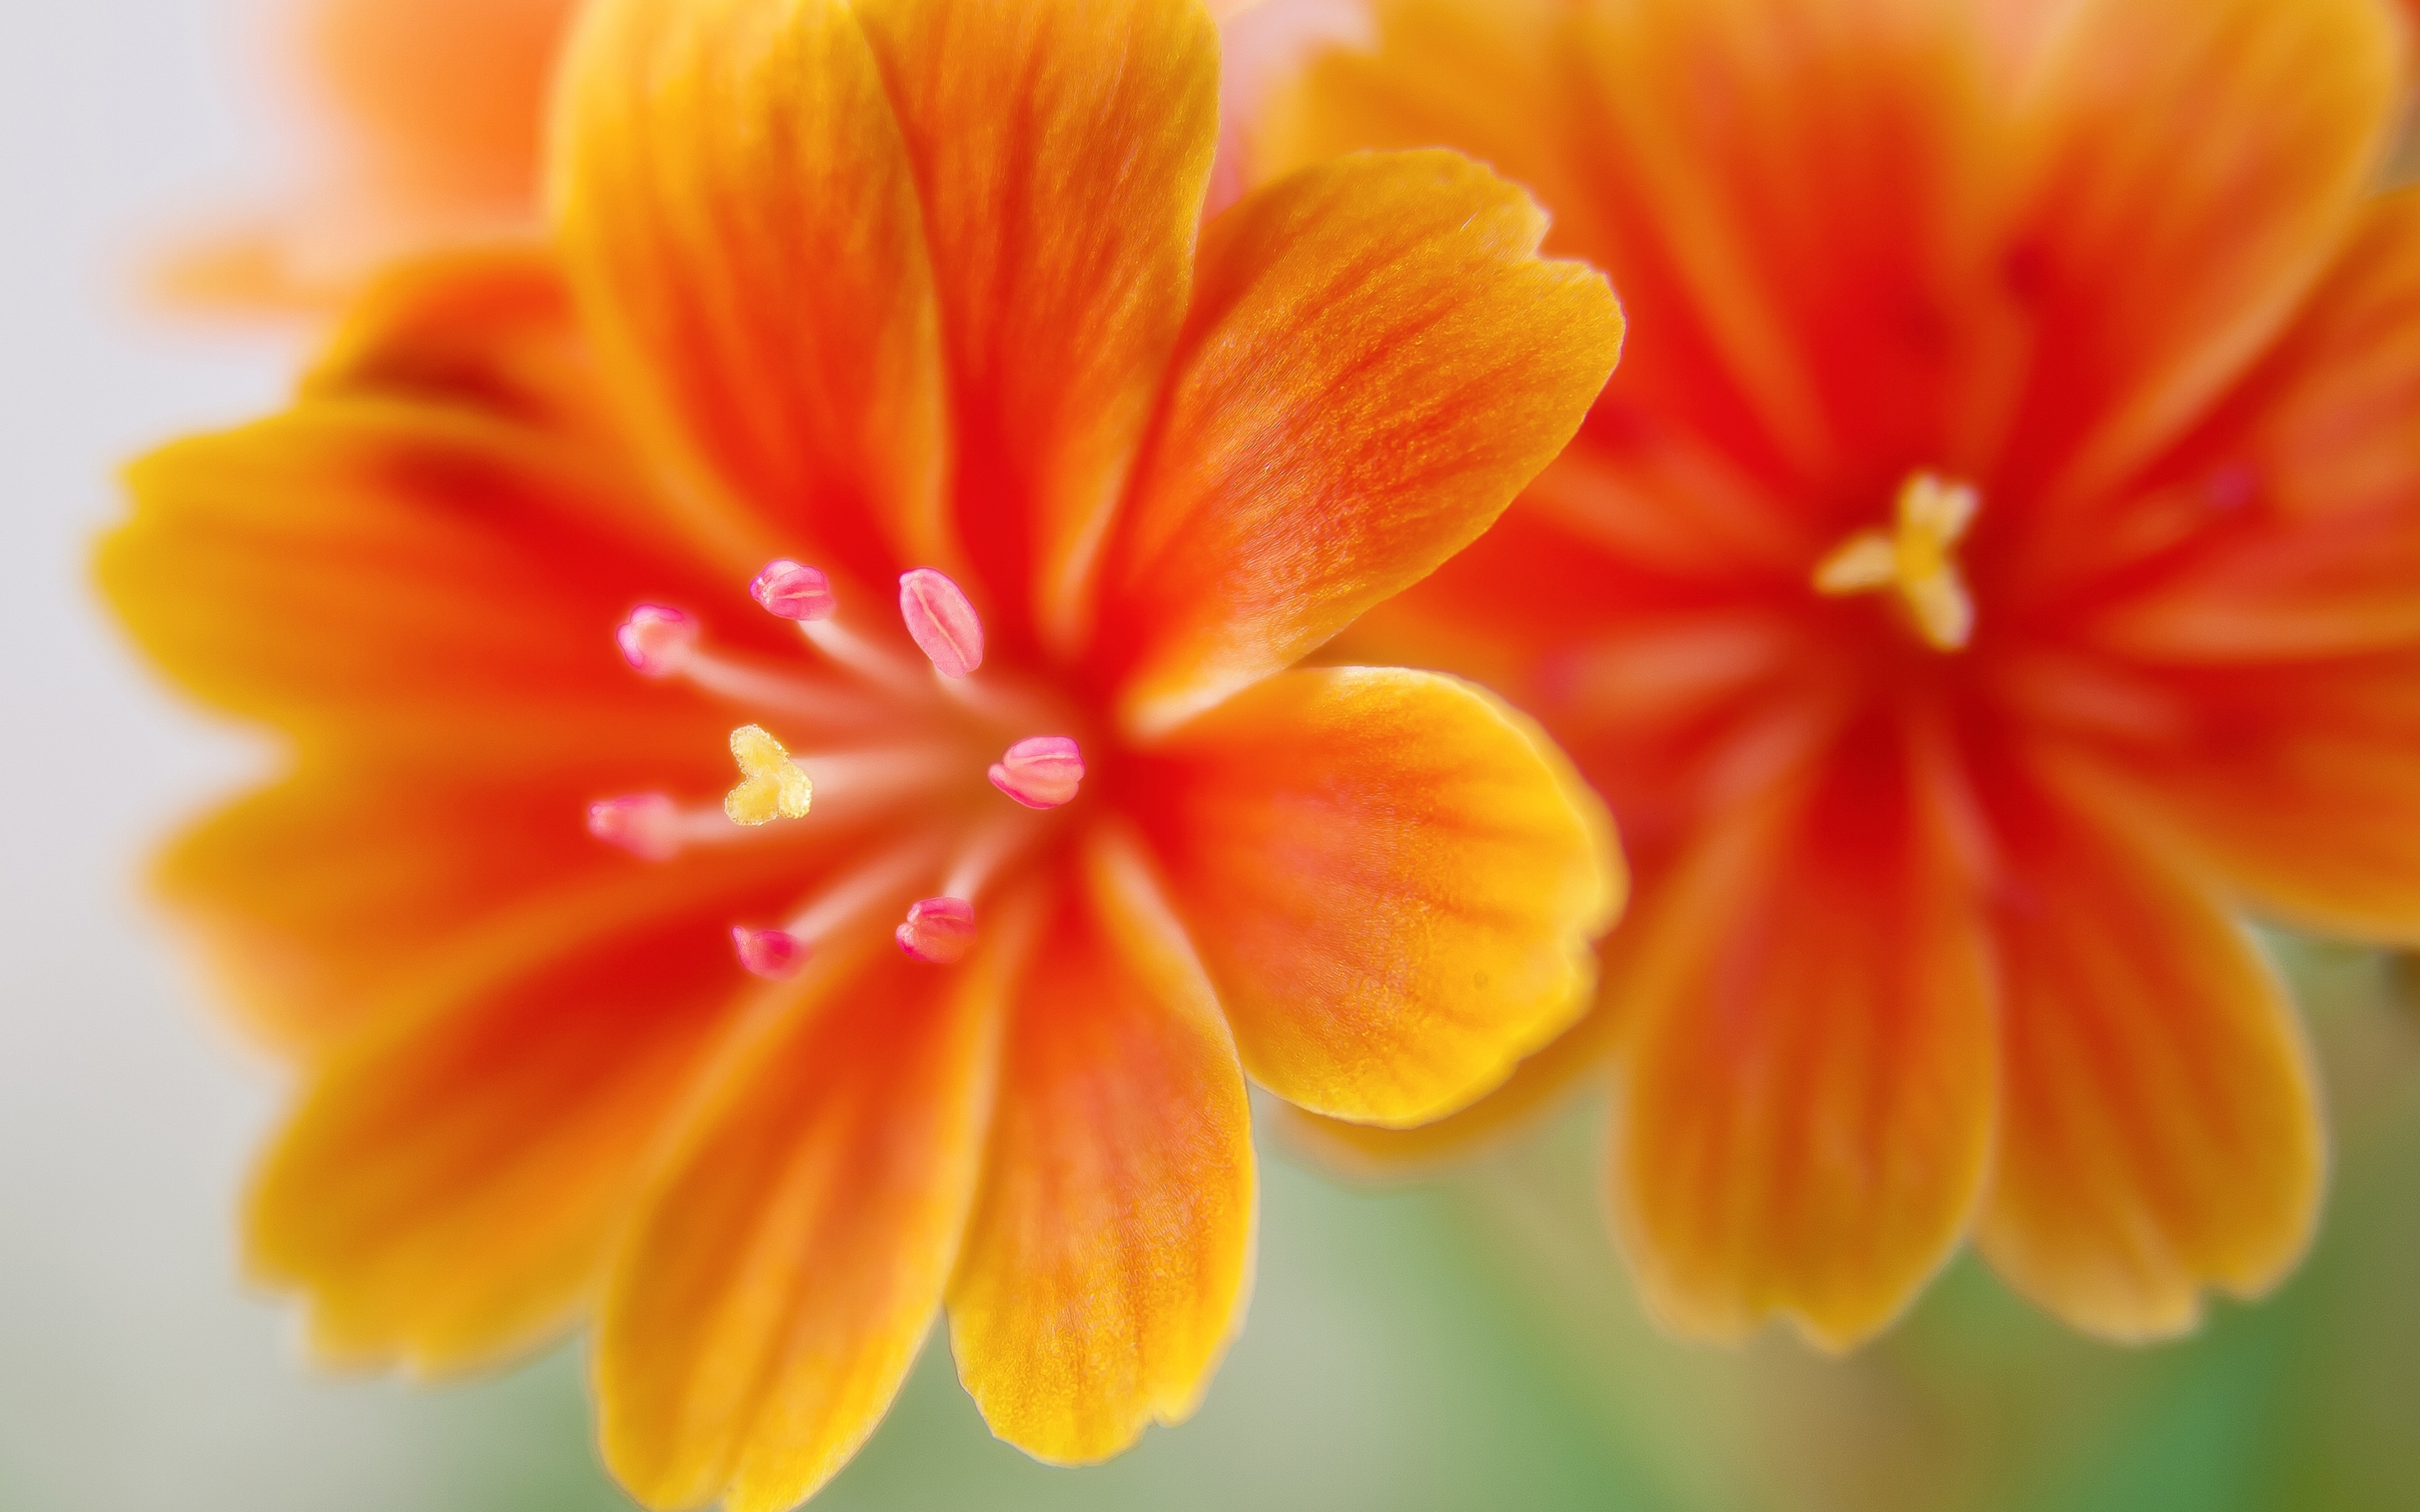 Flowers with orange petals